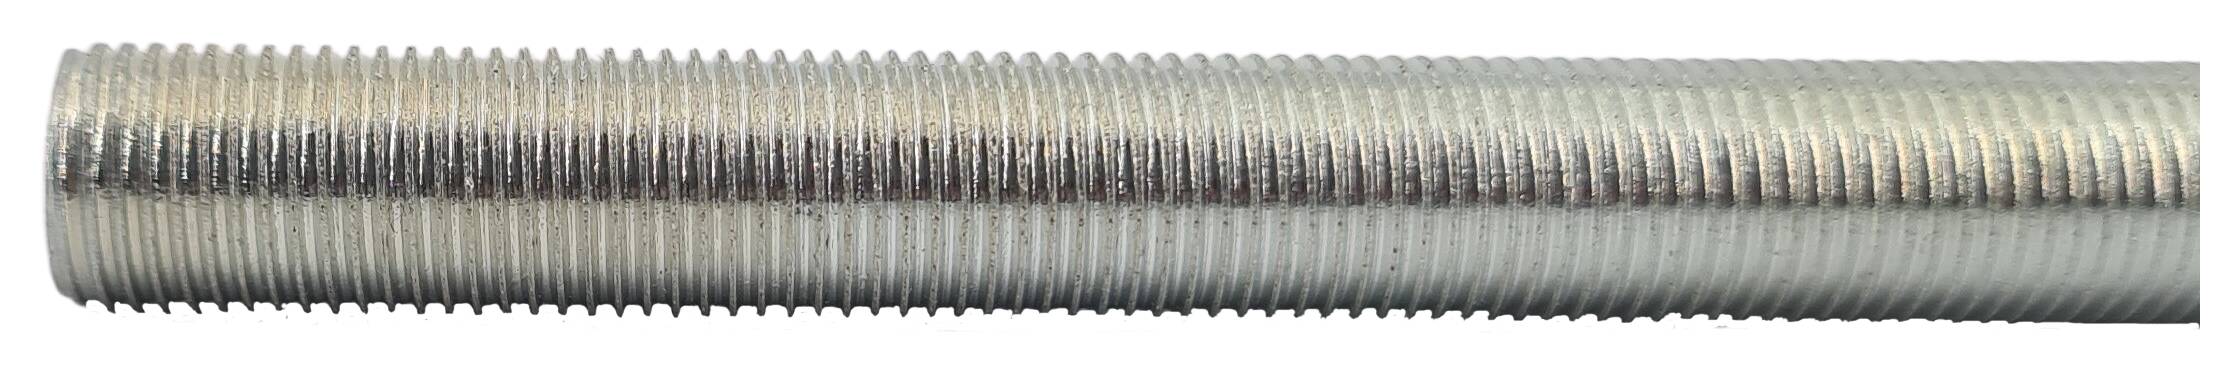 iron thread tube M10x1x255 round zinc